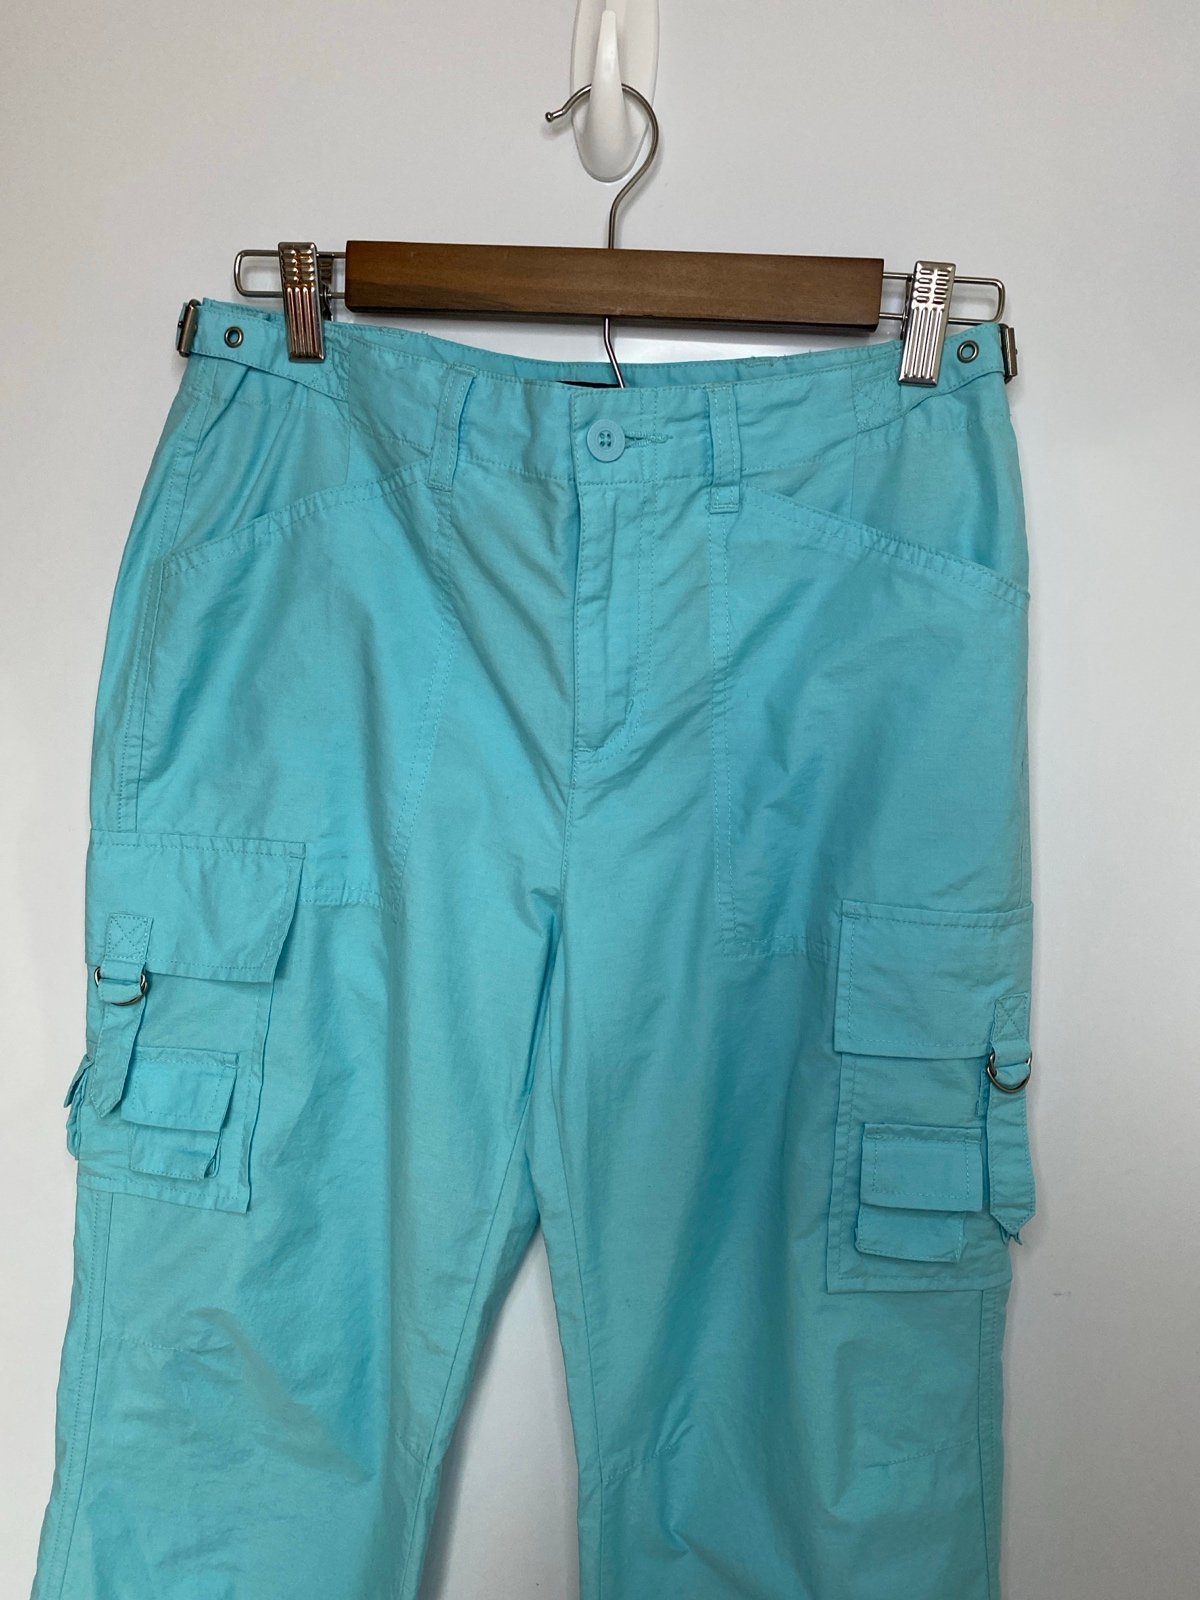 Exclusive Baileys point cotton blend cargo capri pants. Ladies size 7 kwloMc7Lw Novel 